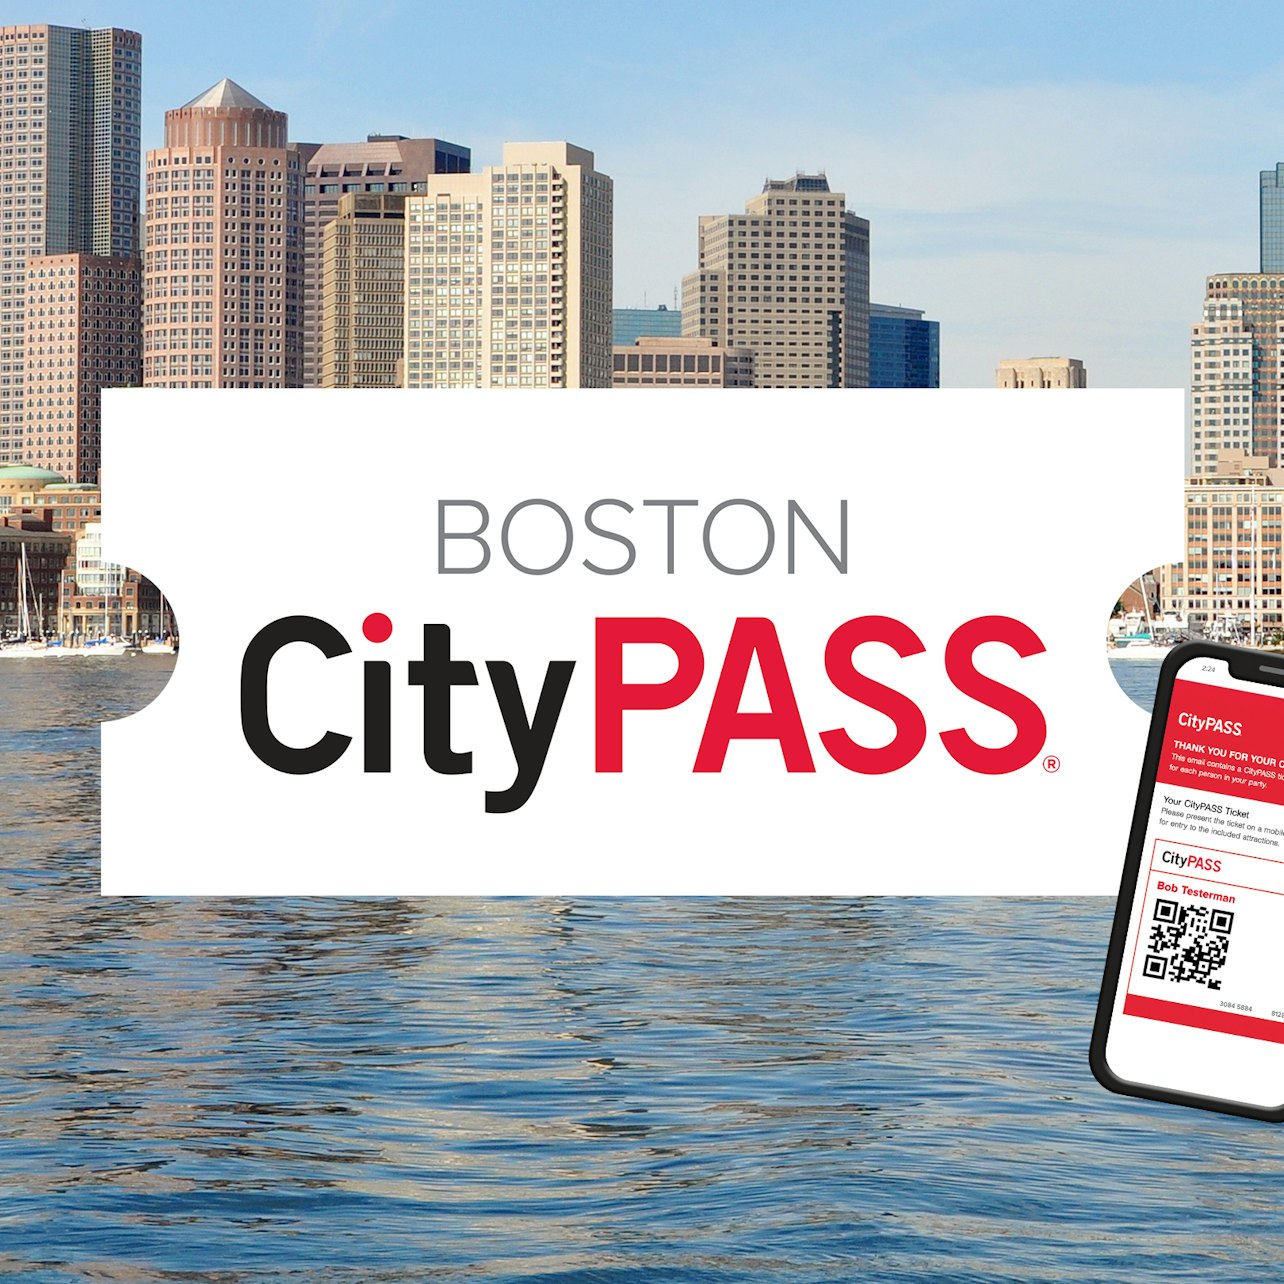 Boston CityPASS - Accommodations in Boston